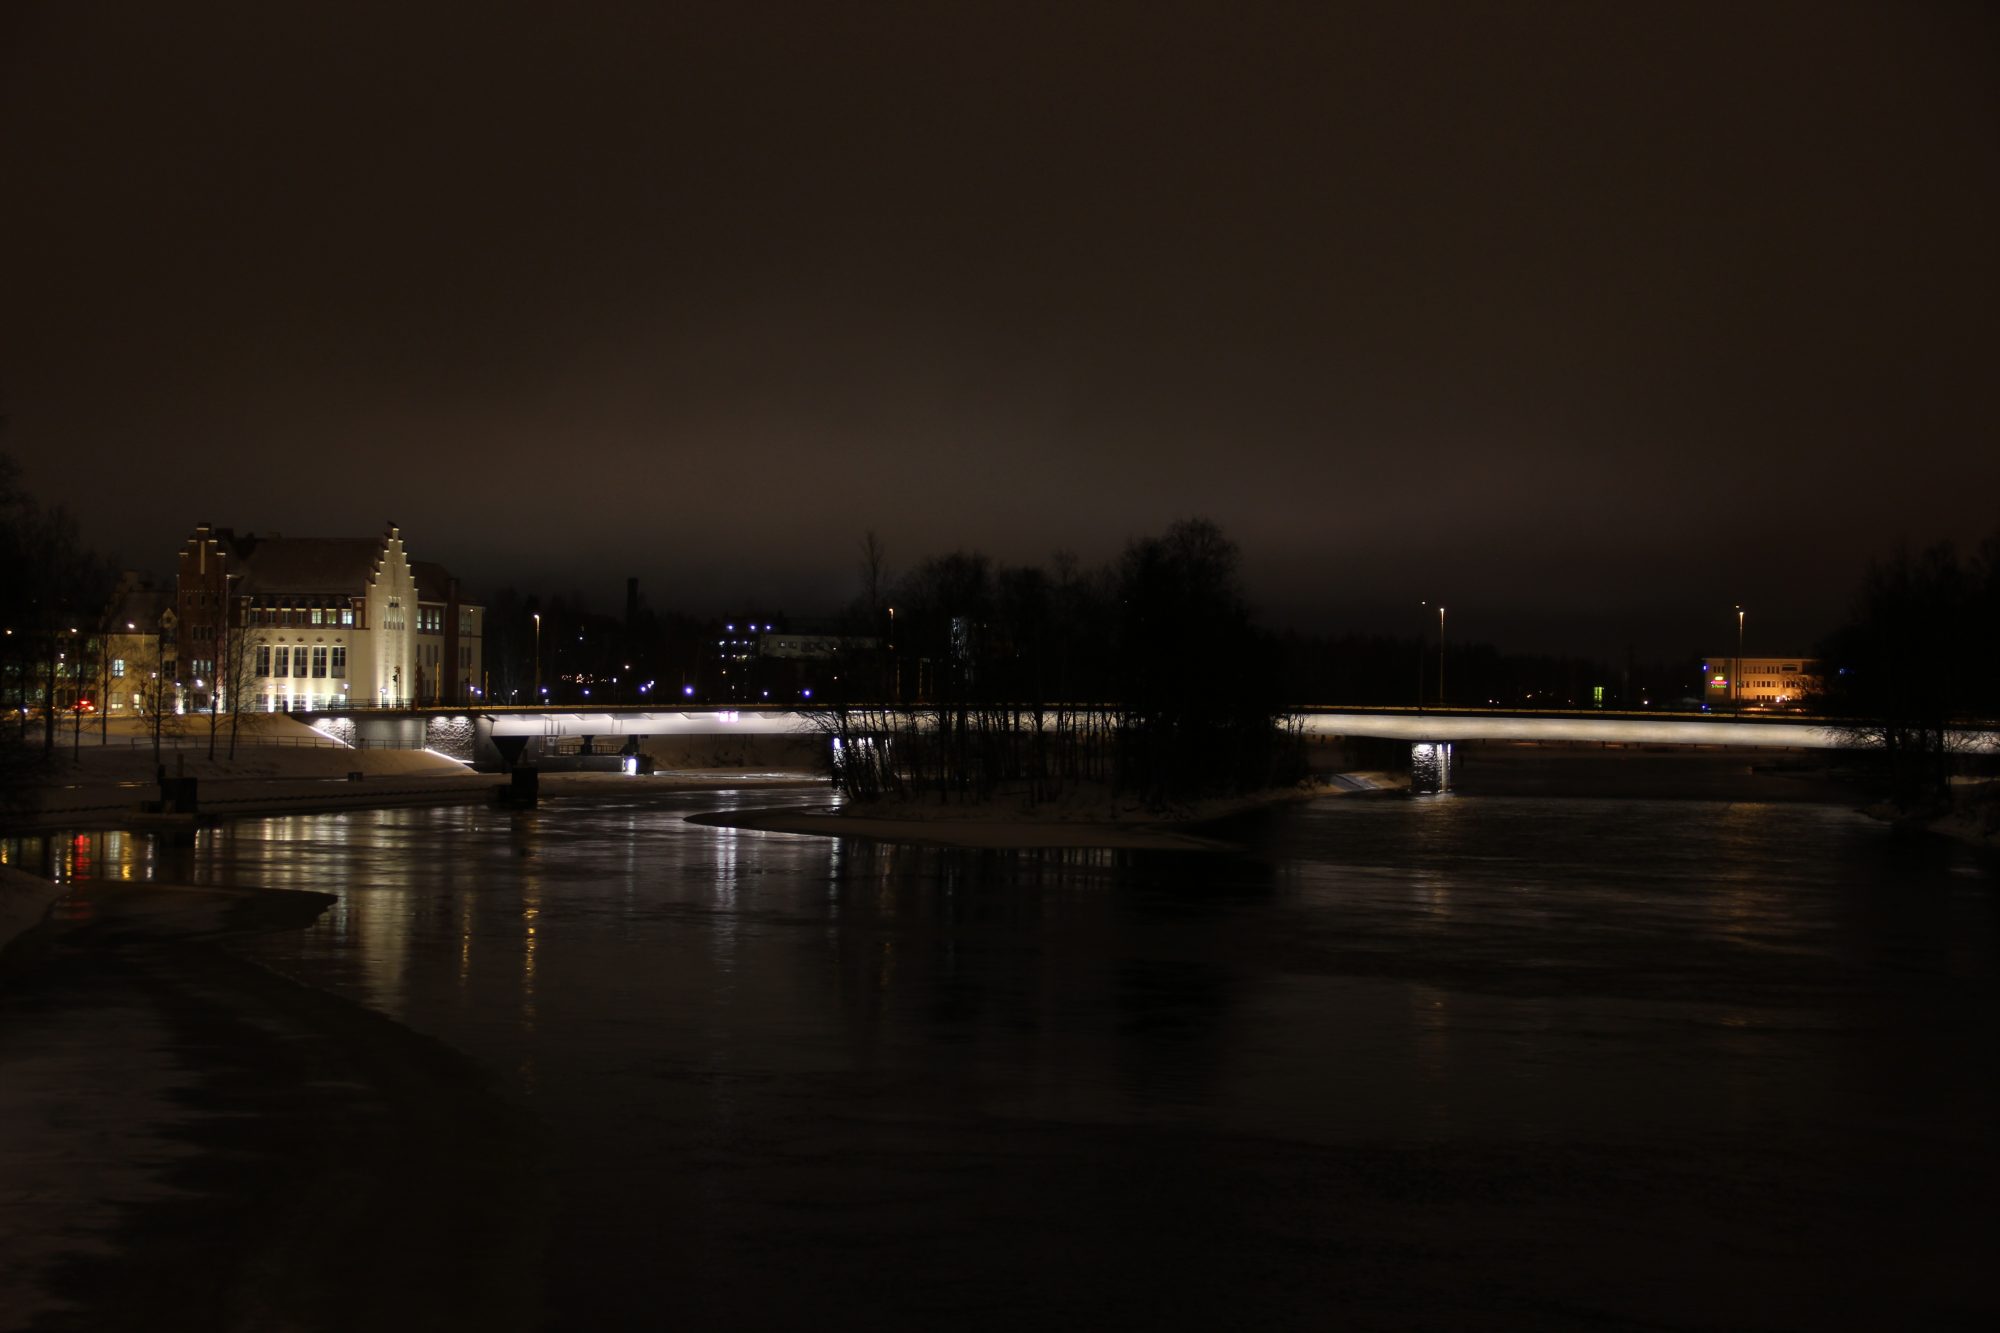 Sirkkala bridge in Joensuu sheds a new light